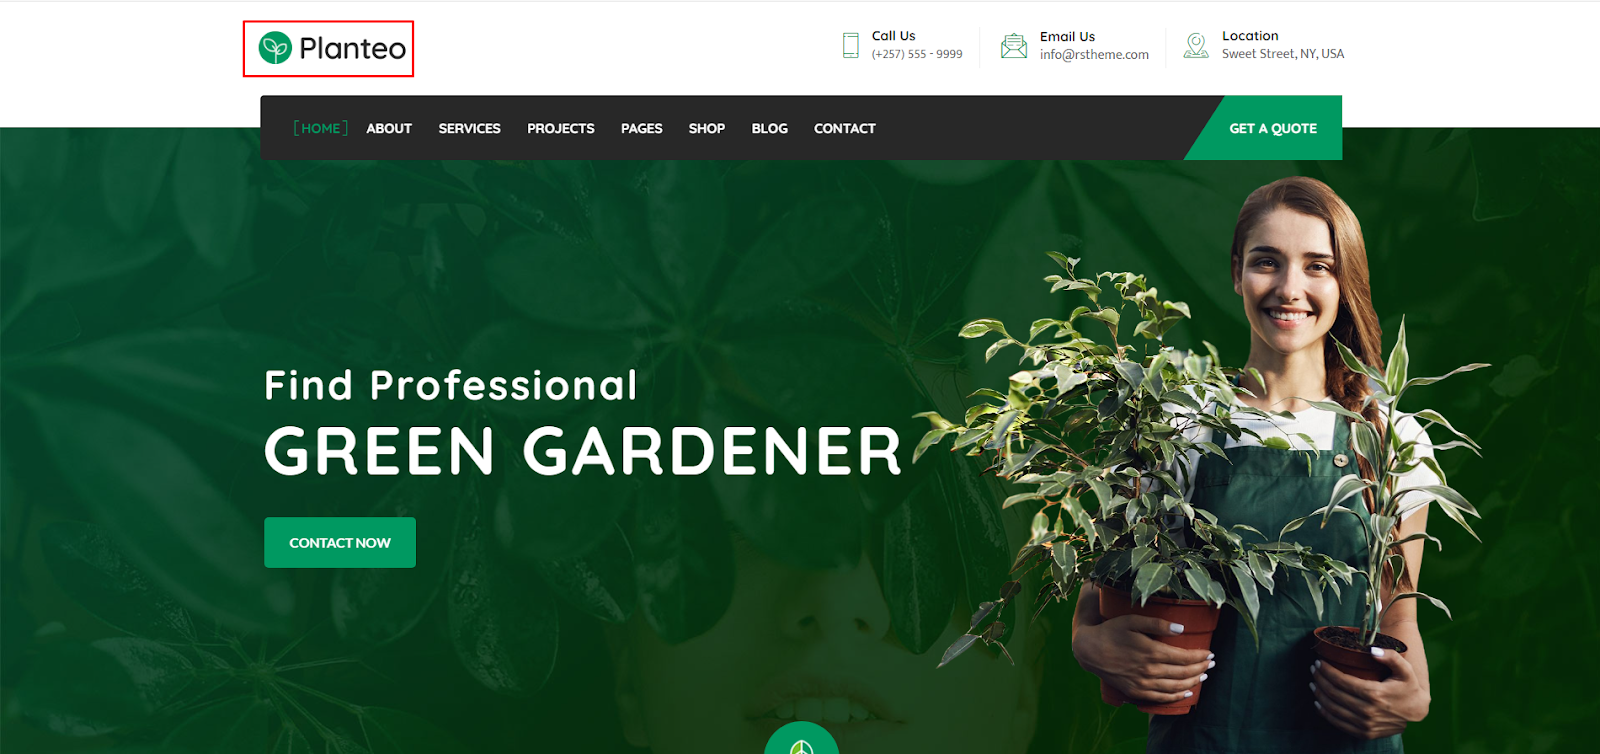 Planteo - Landscaping and Gardening WordPress Theme  